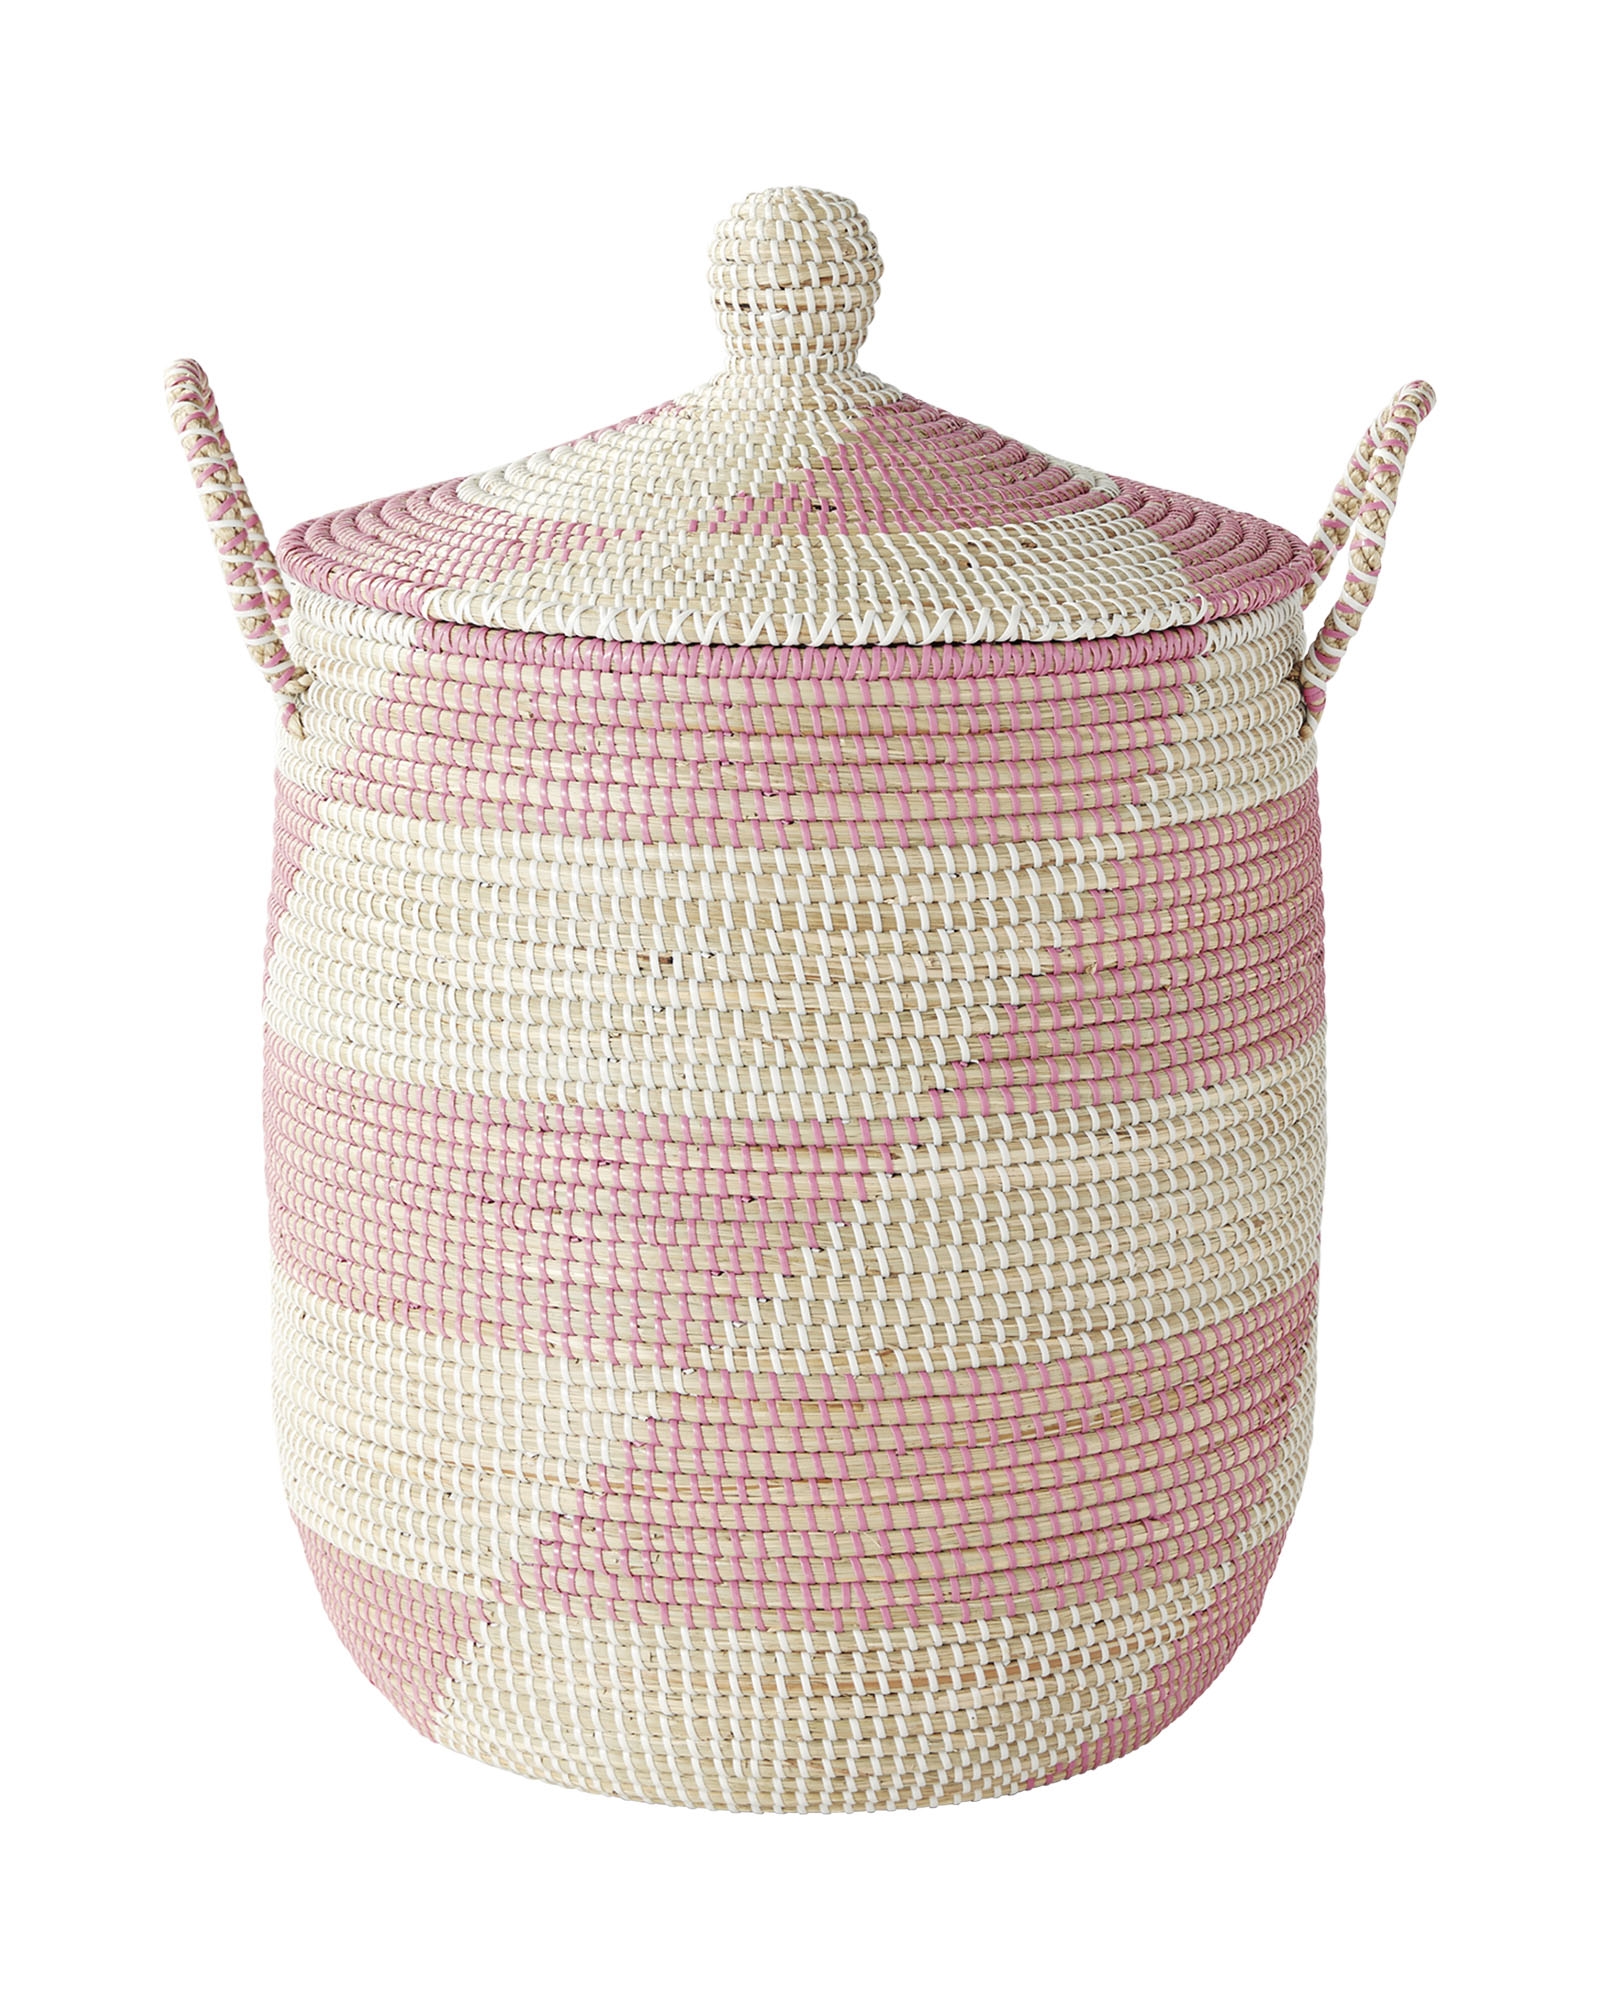 La Jolla Basket-Pink-Medium - Image 0